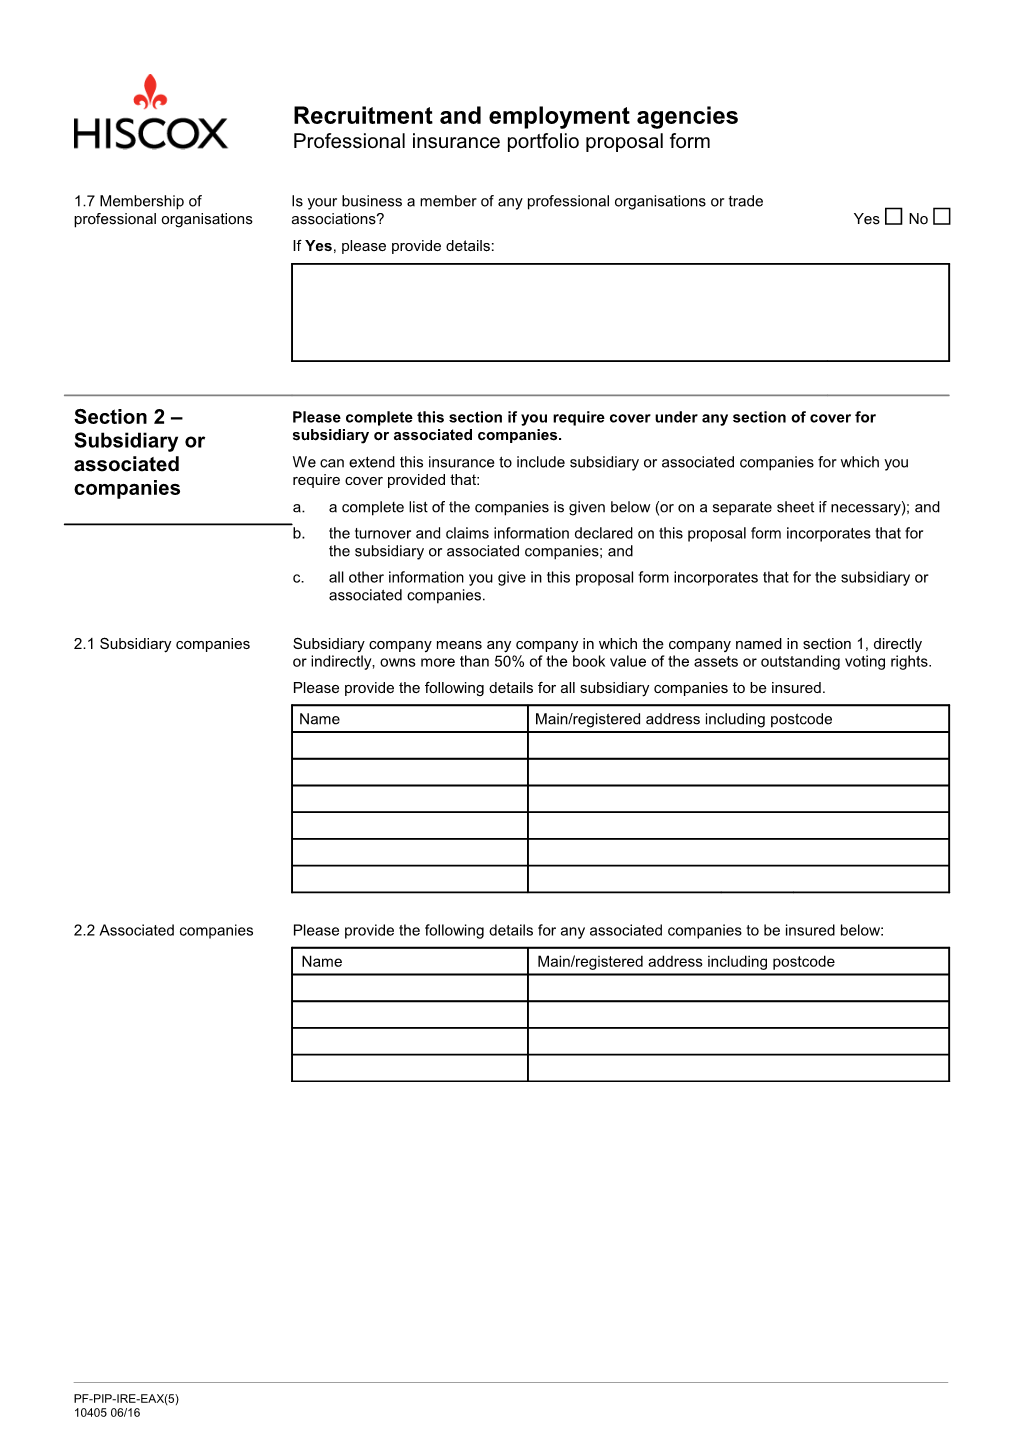 Recruitment Consultants - Proposal Form (Ireland)